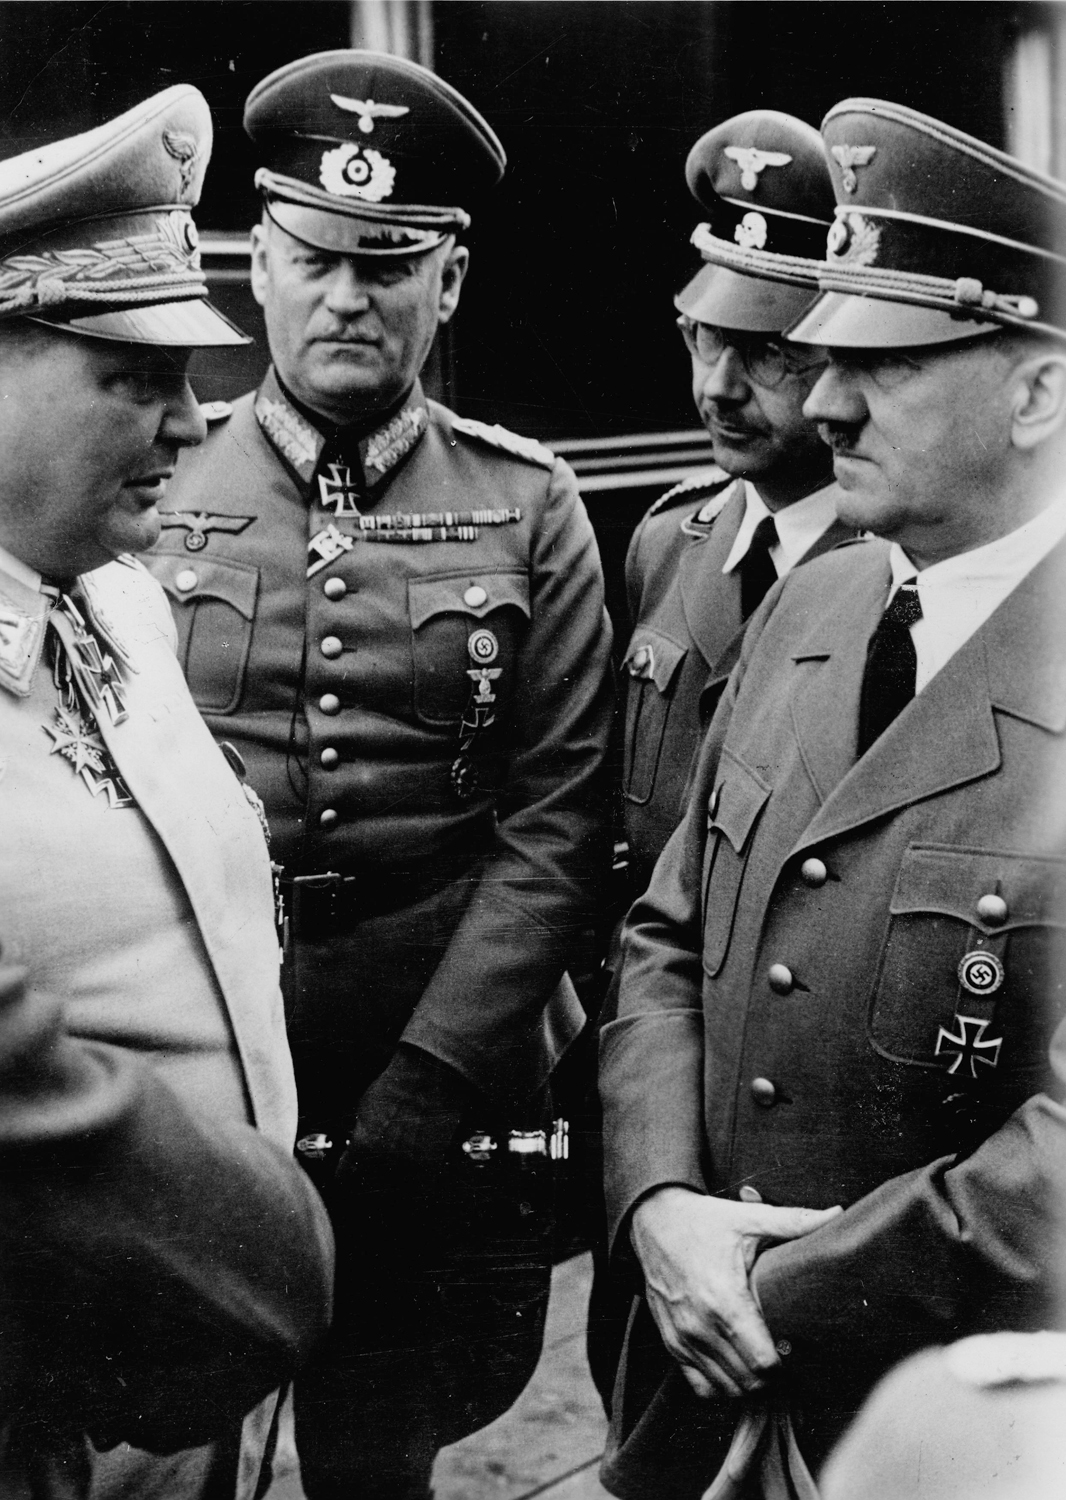 Goering, Keitel, and Himmler, gathered near the Sonderzug for Hitler's 52th Birthday